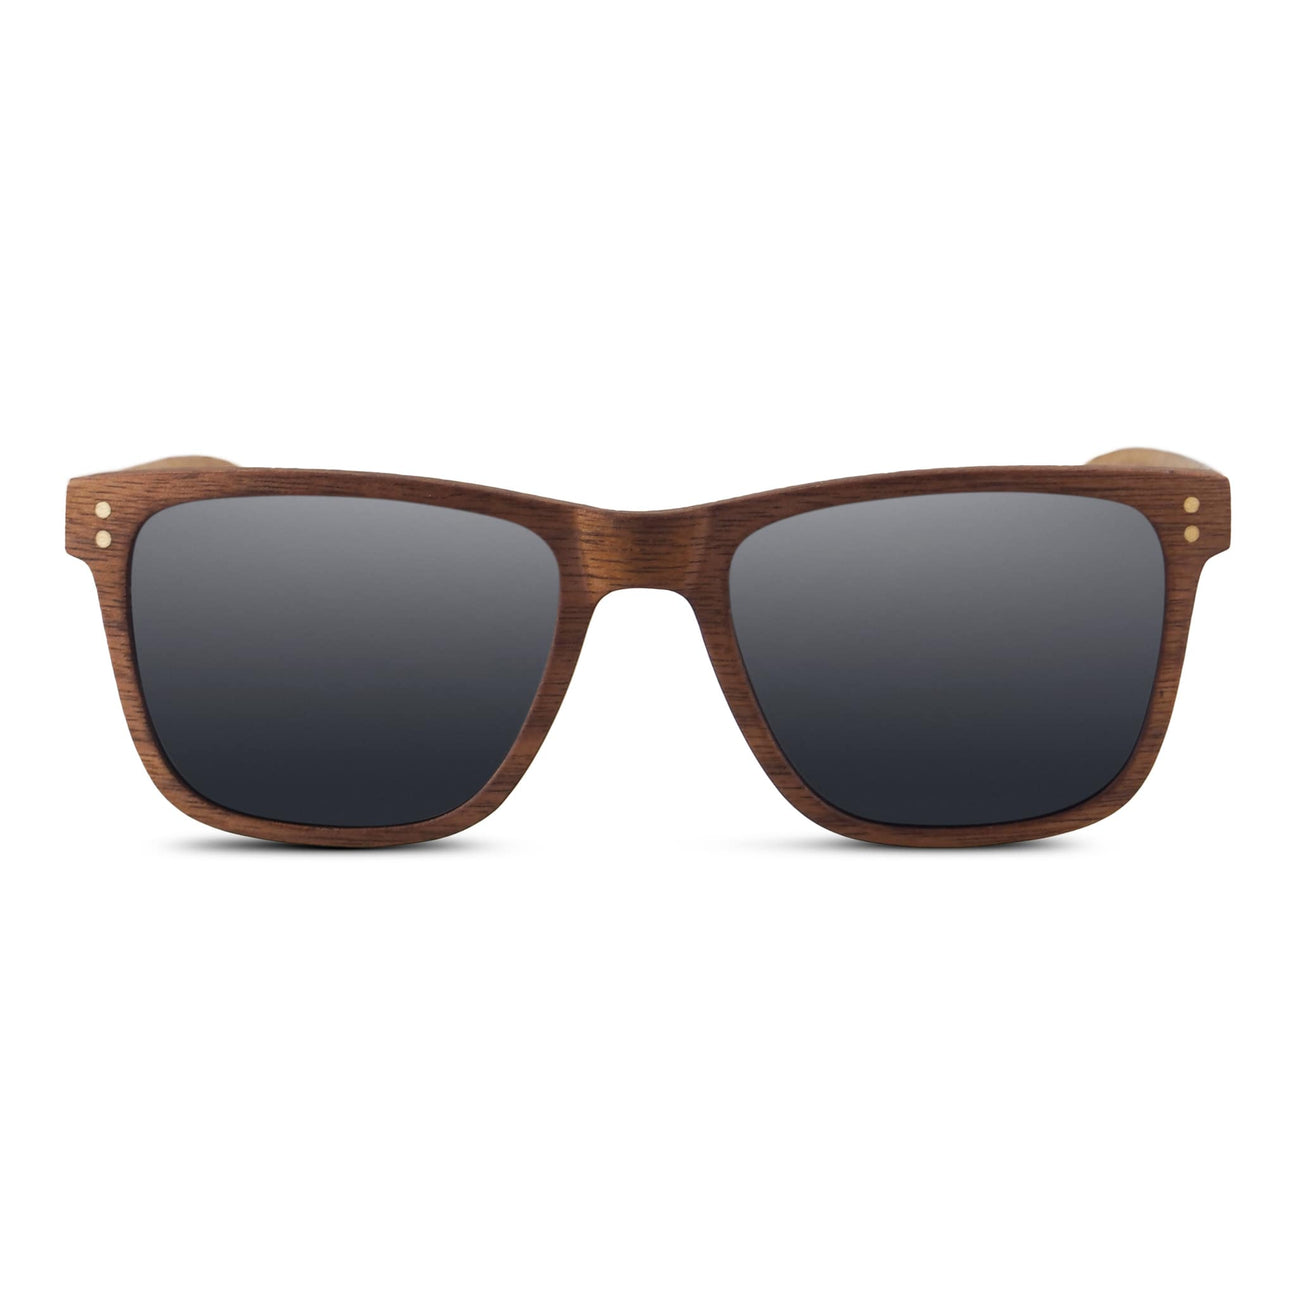 Joycoast Wood - Sunglasses Atmos Wayfinder Walnut